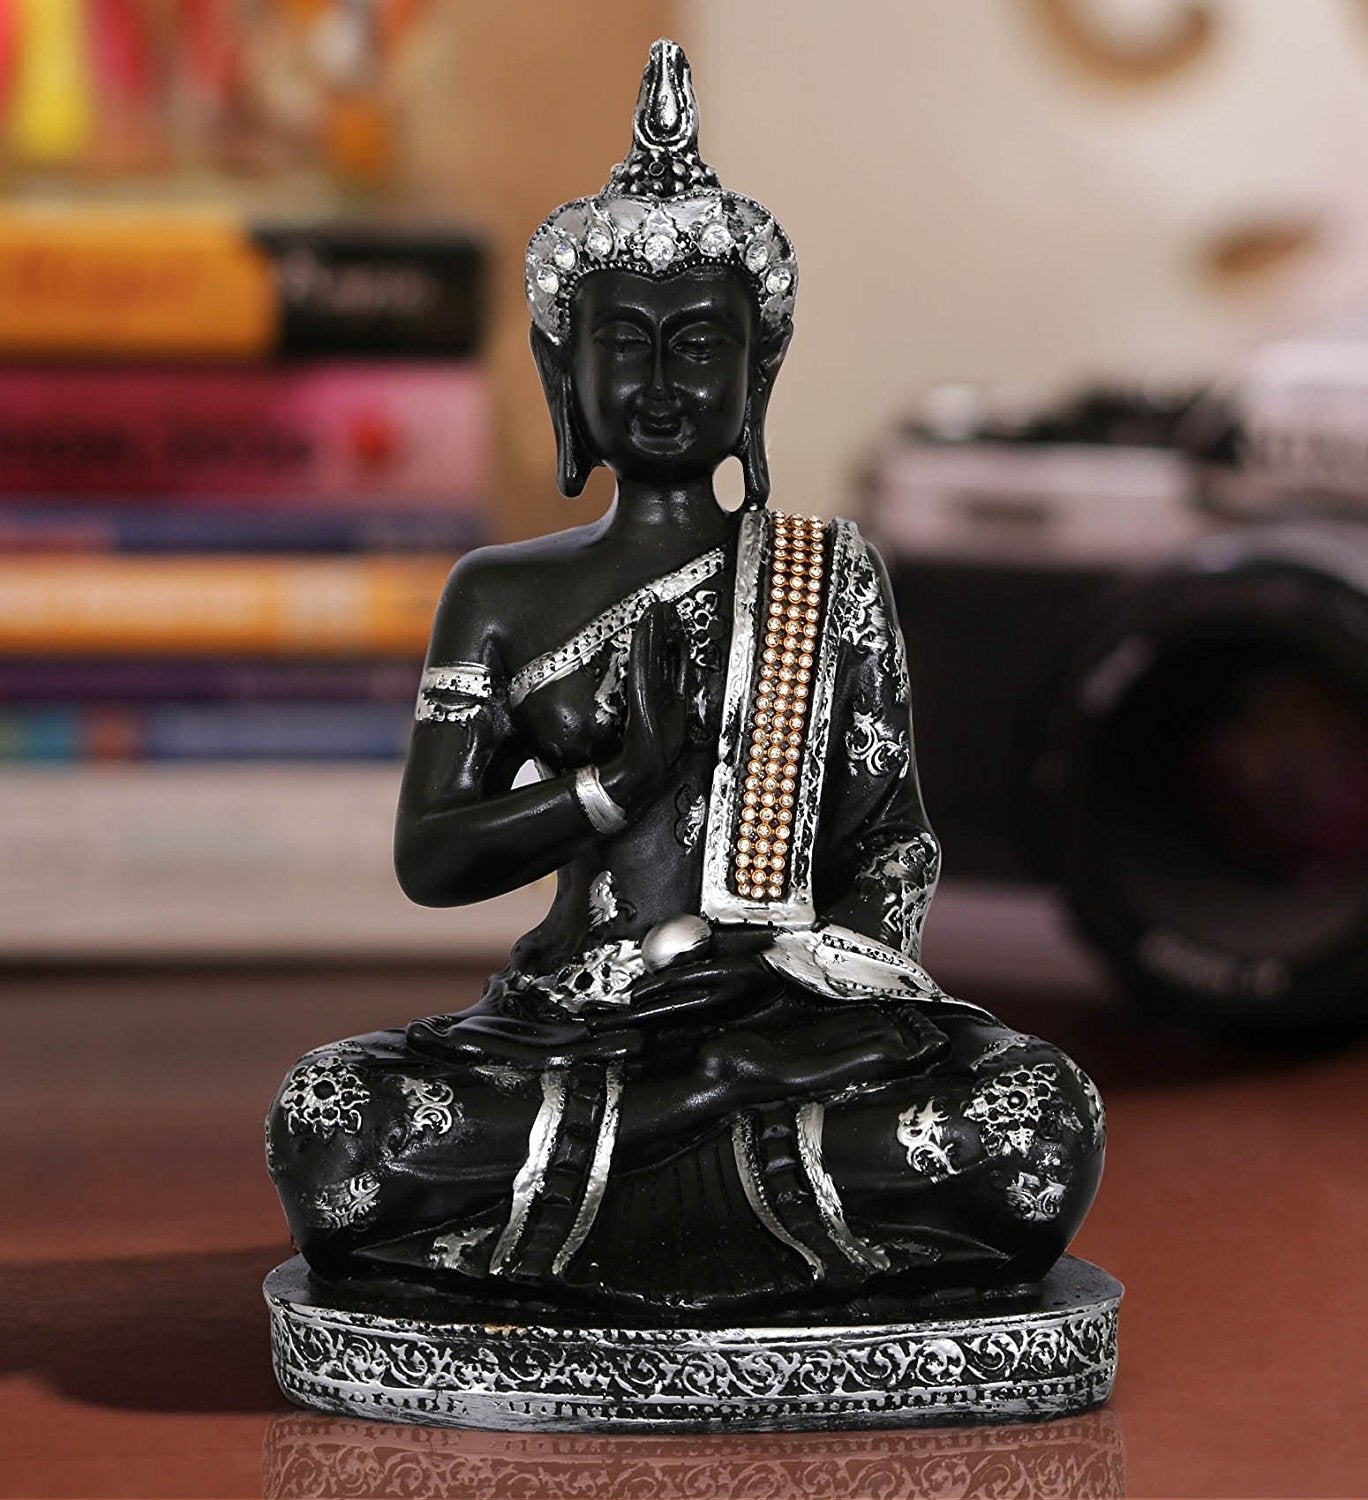 Handcrafted Decorative Meditating Buddha (Size - 25CmxSilver and BlackxPolyresin), 1 Lord Buddha Idol